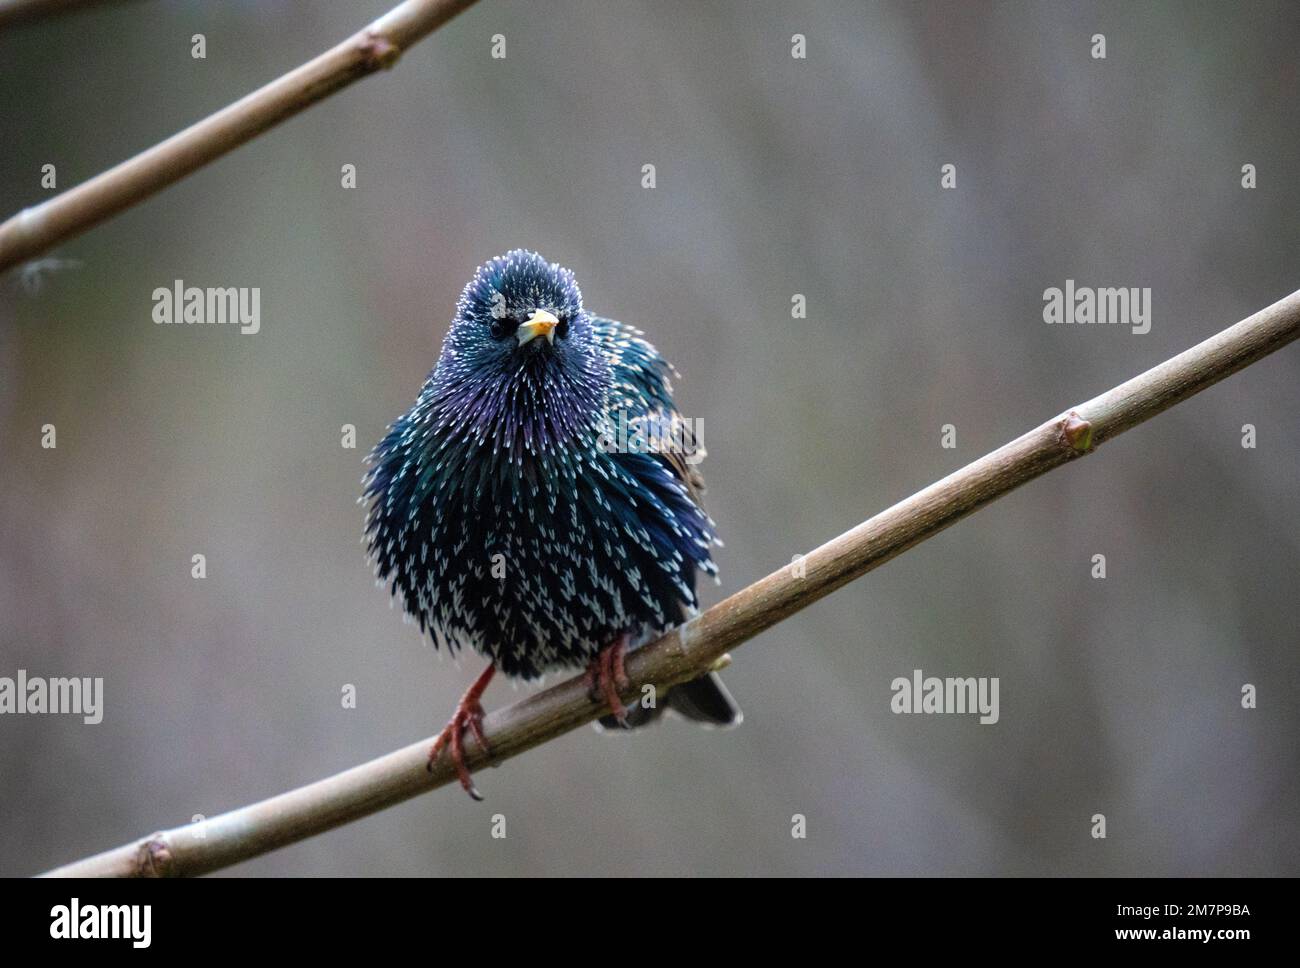 Starling bird on branch Stock Photo